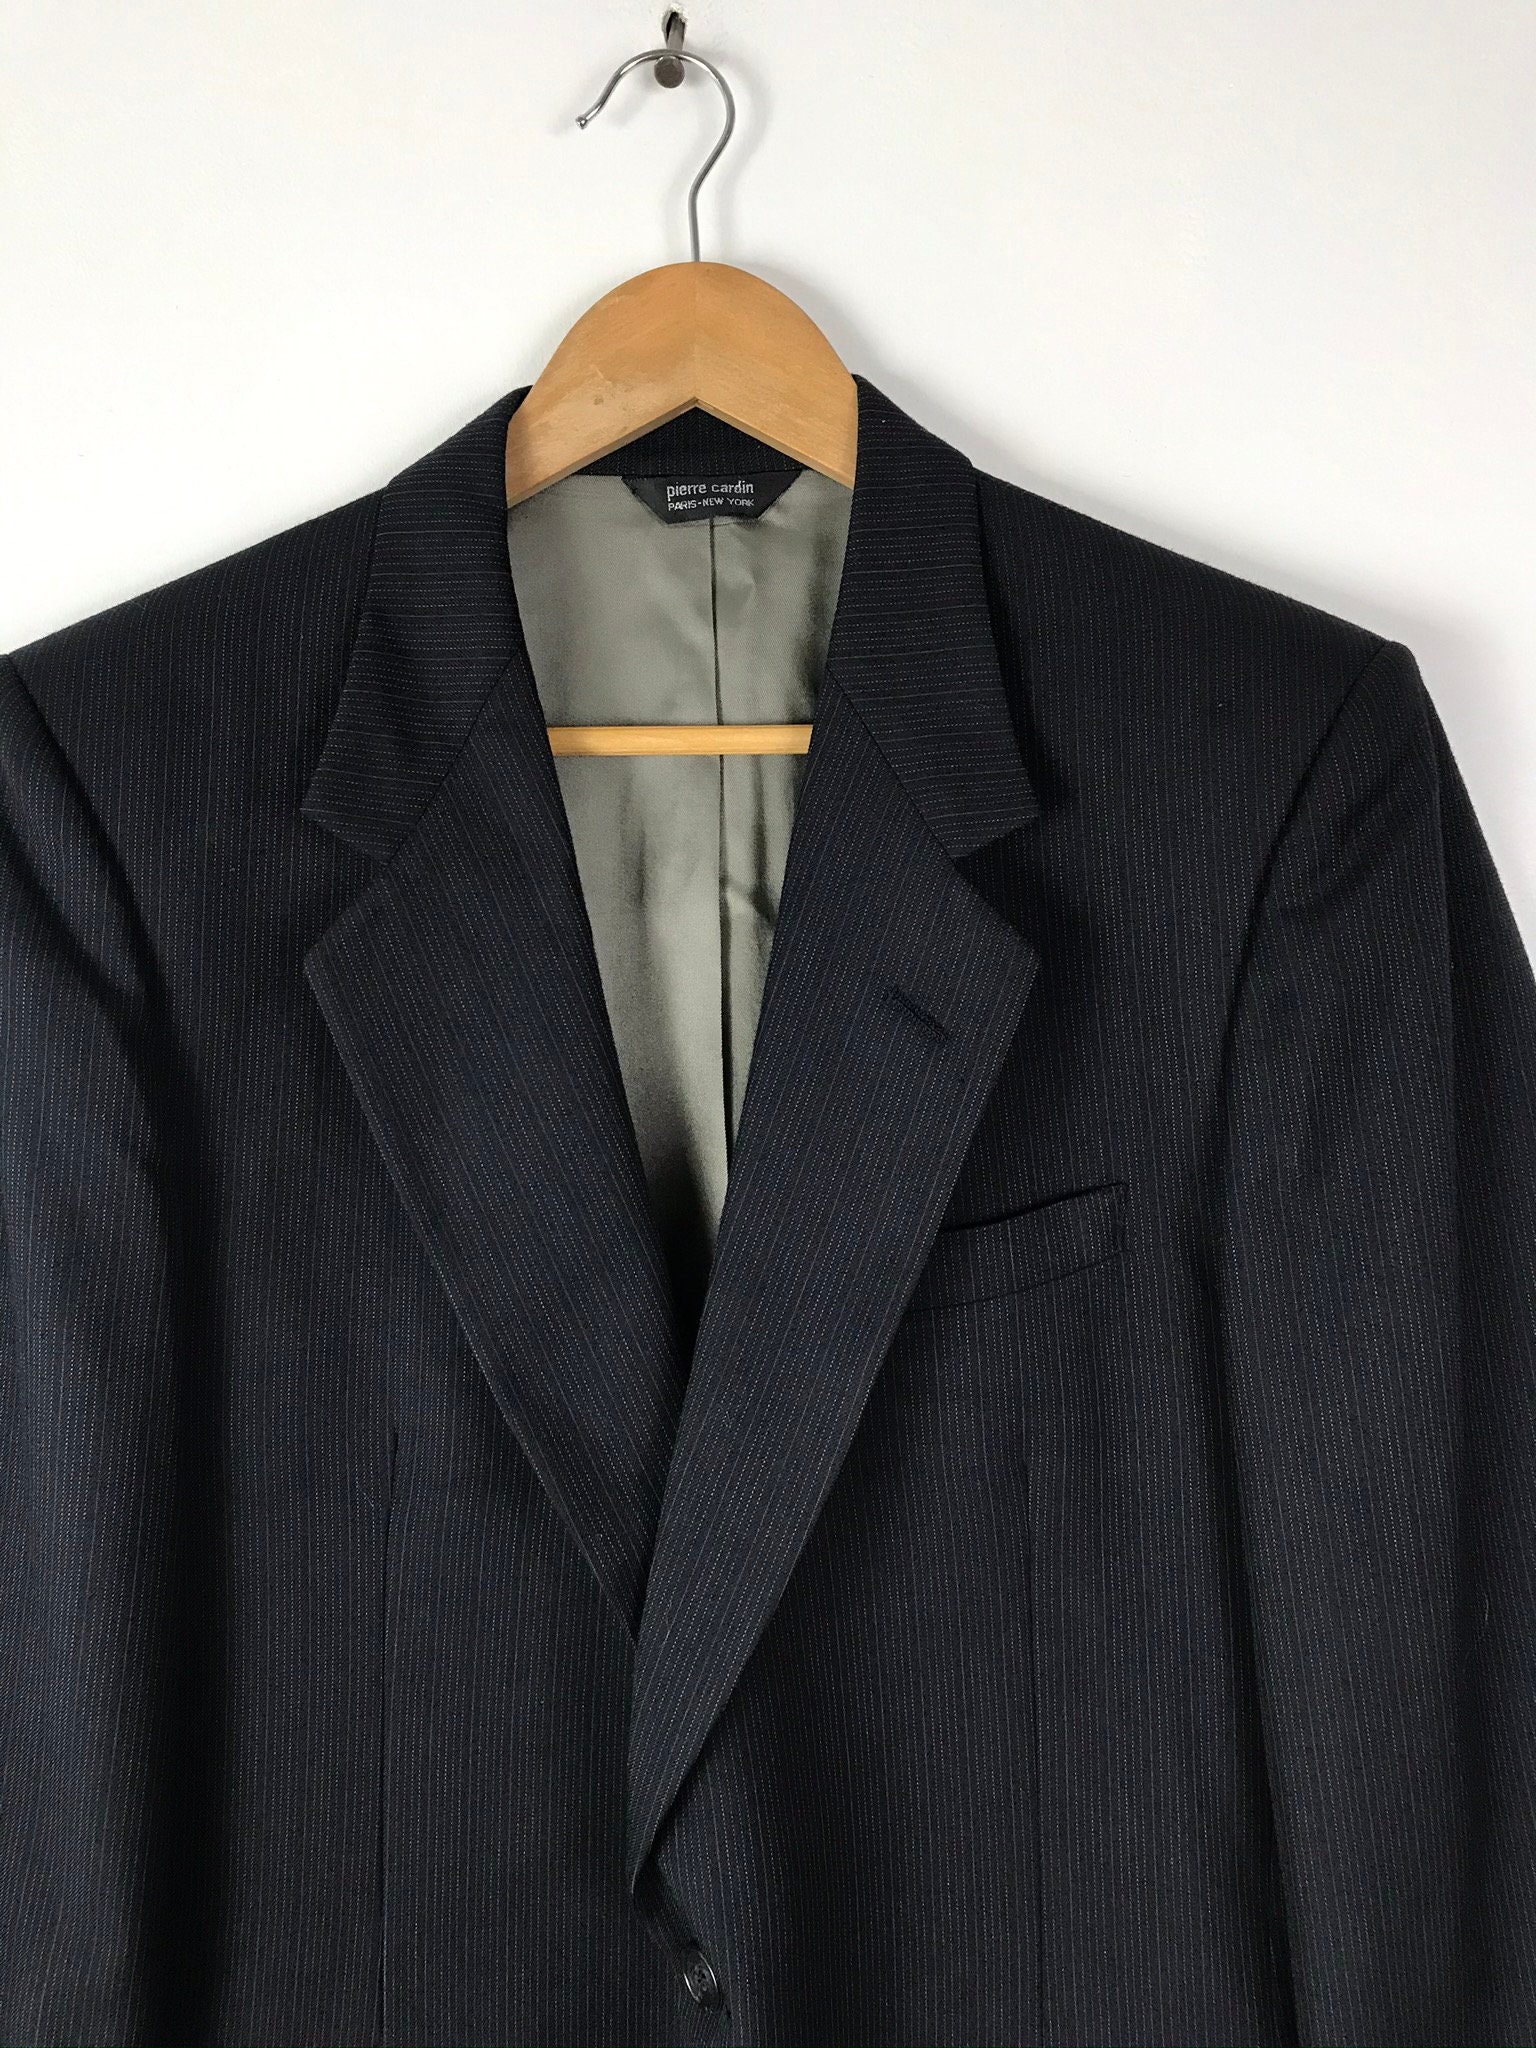 Vintage Pierre Cardin Suit Black Pinstriped Three Piece Suit - Etsy